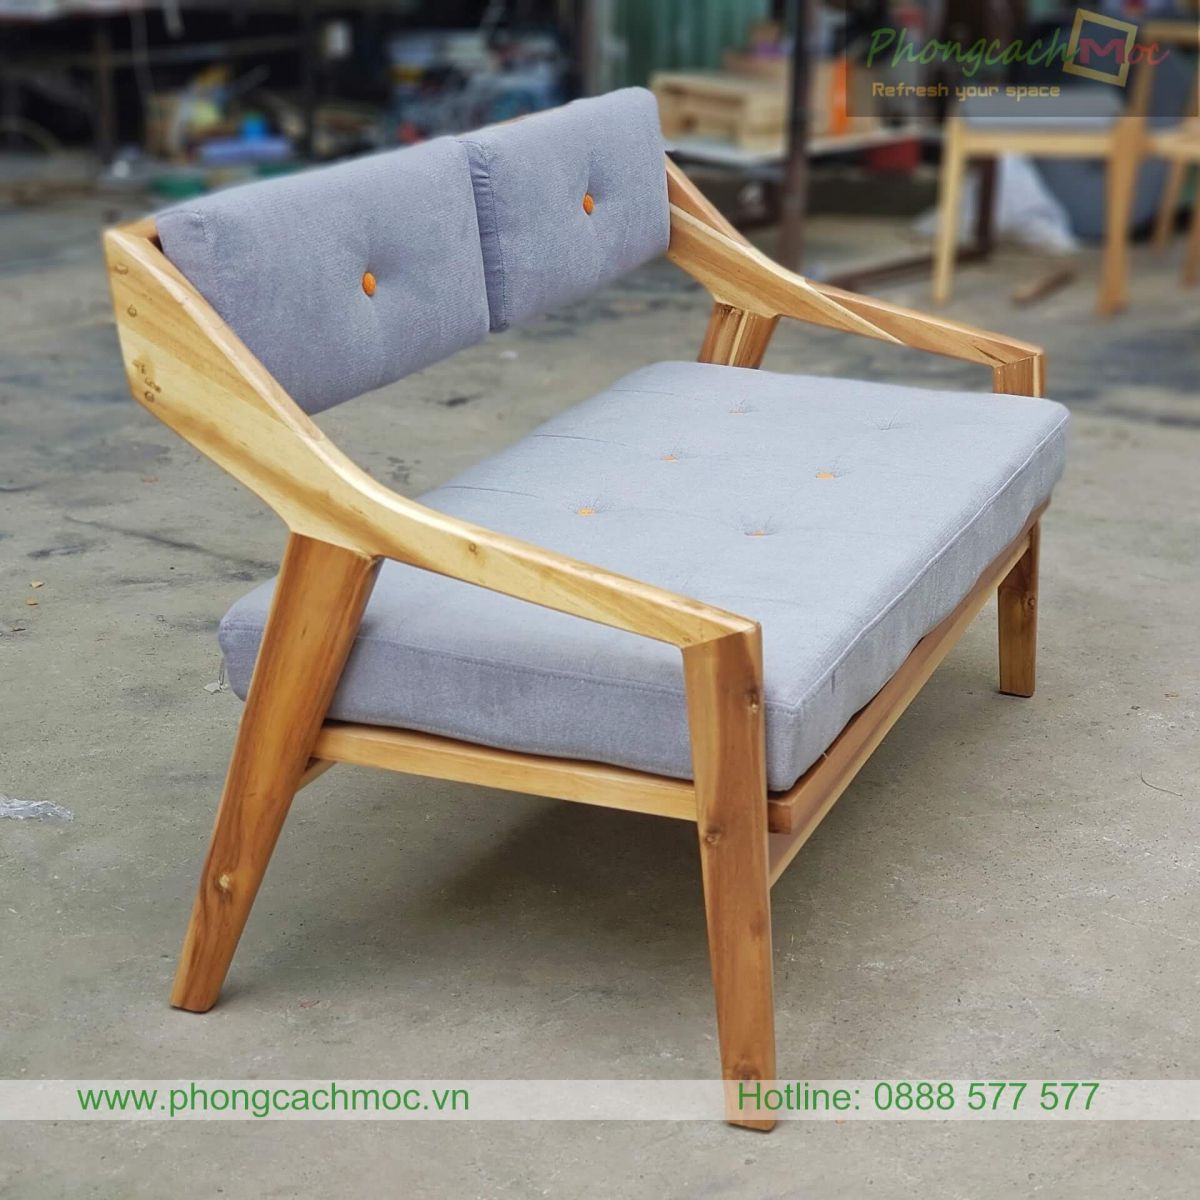 pcm thiết kế sản xuất ghế sofa mf47